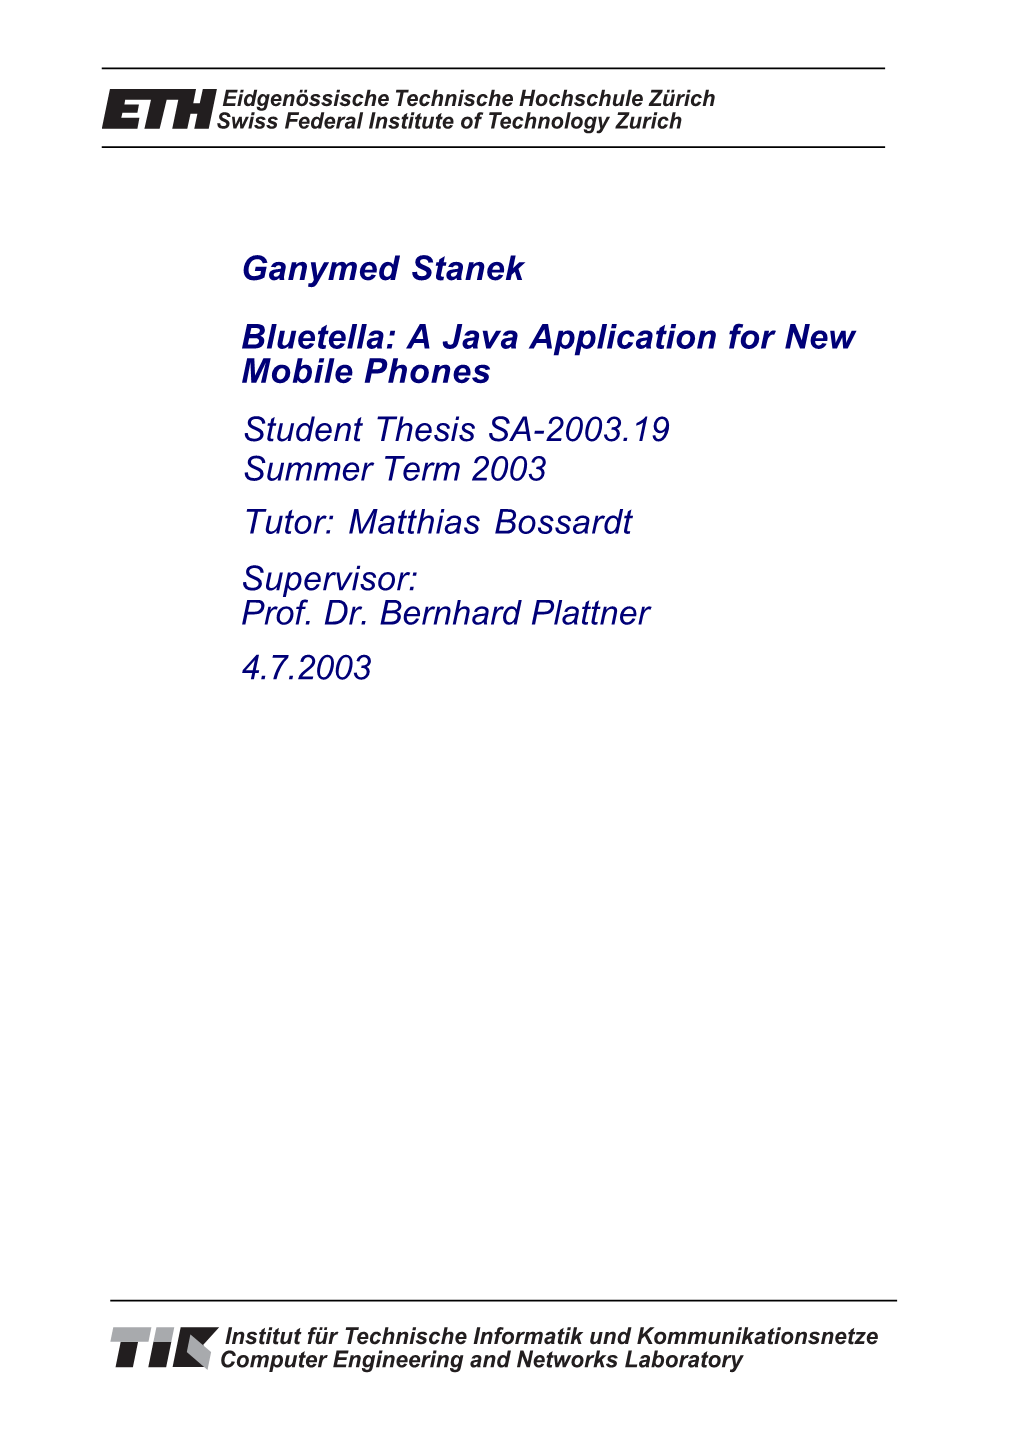 Ganymed Stanek Bluetella: a Java Application for New Mobile Phones Student Thesis SA-2003.19 Summer Term 2003 Tutor: Matthias Bossardt Supervisor: Prof